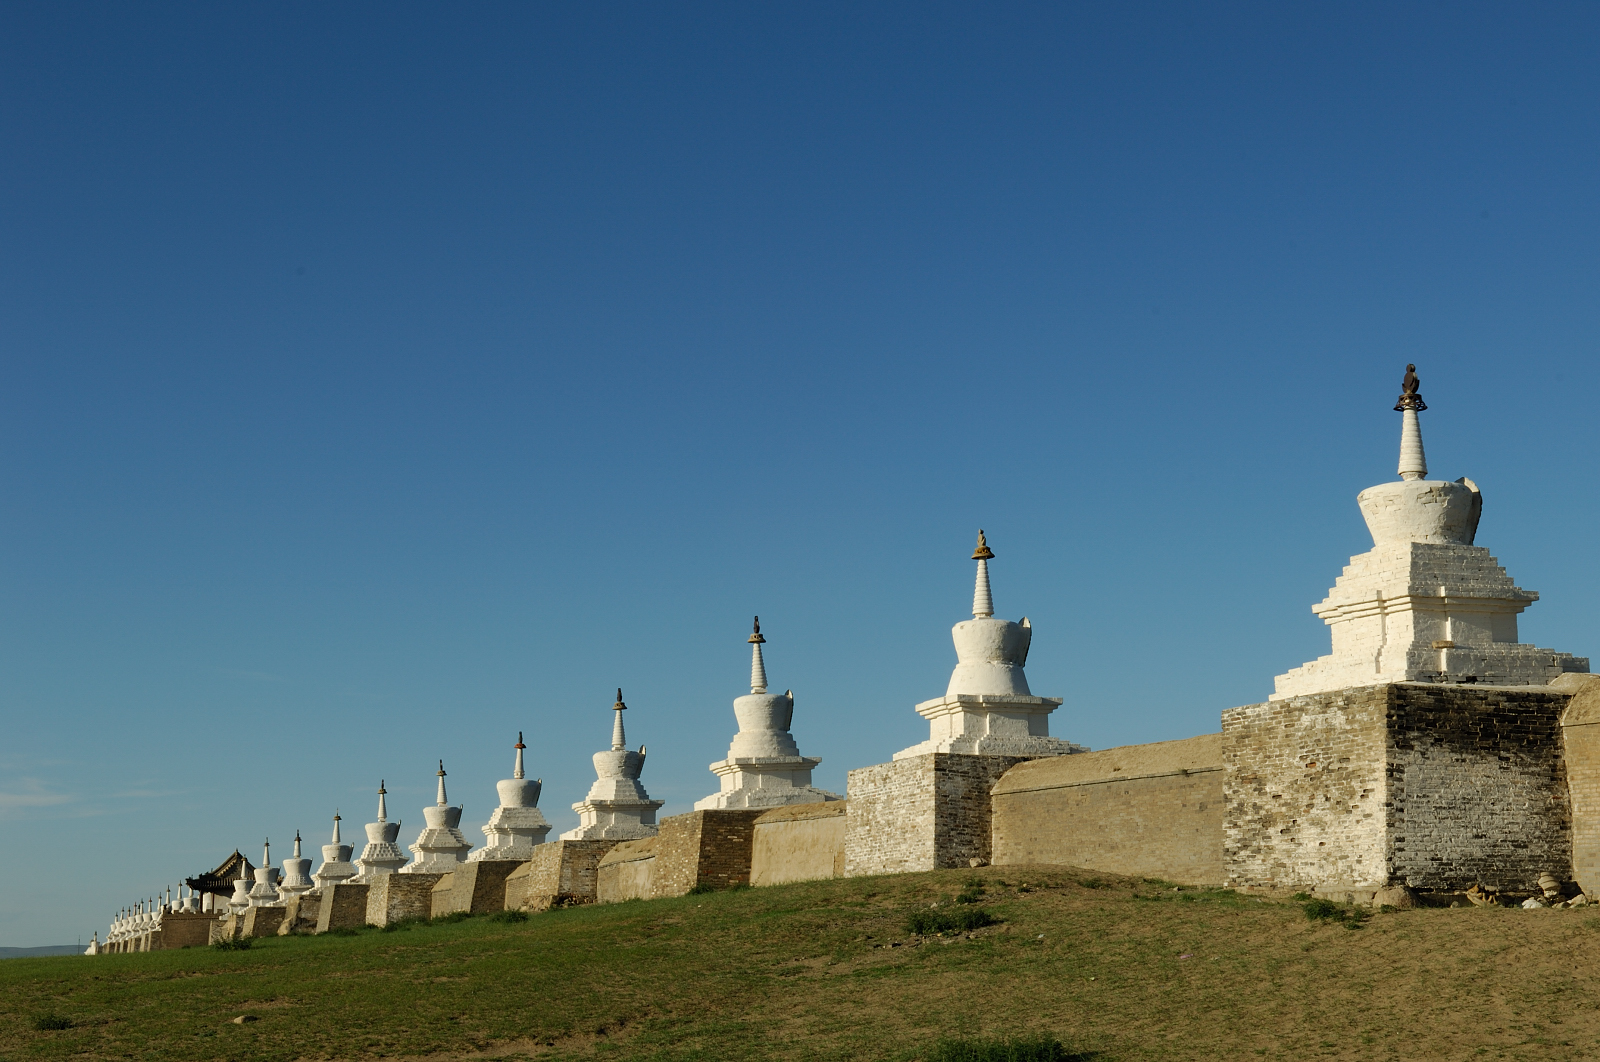 Erdenezuu Monastery